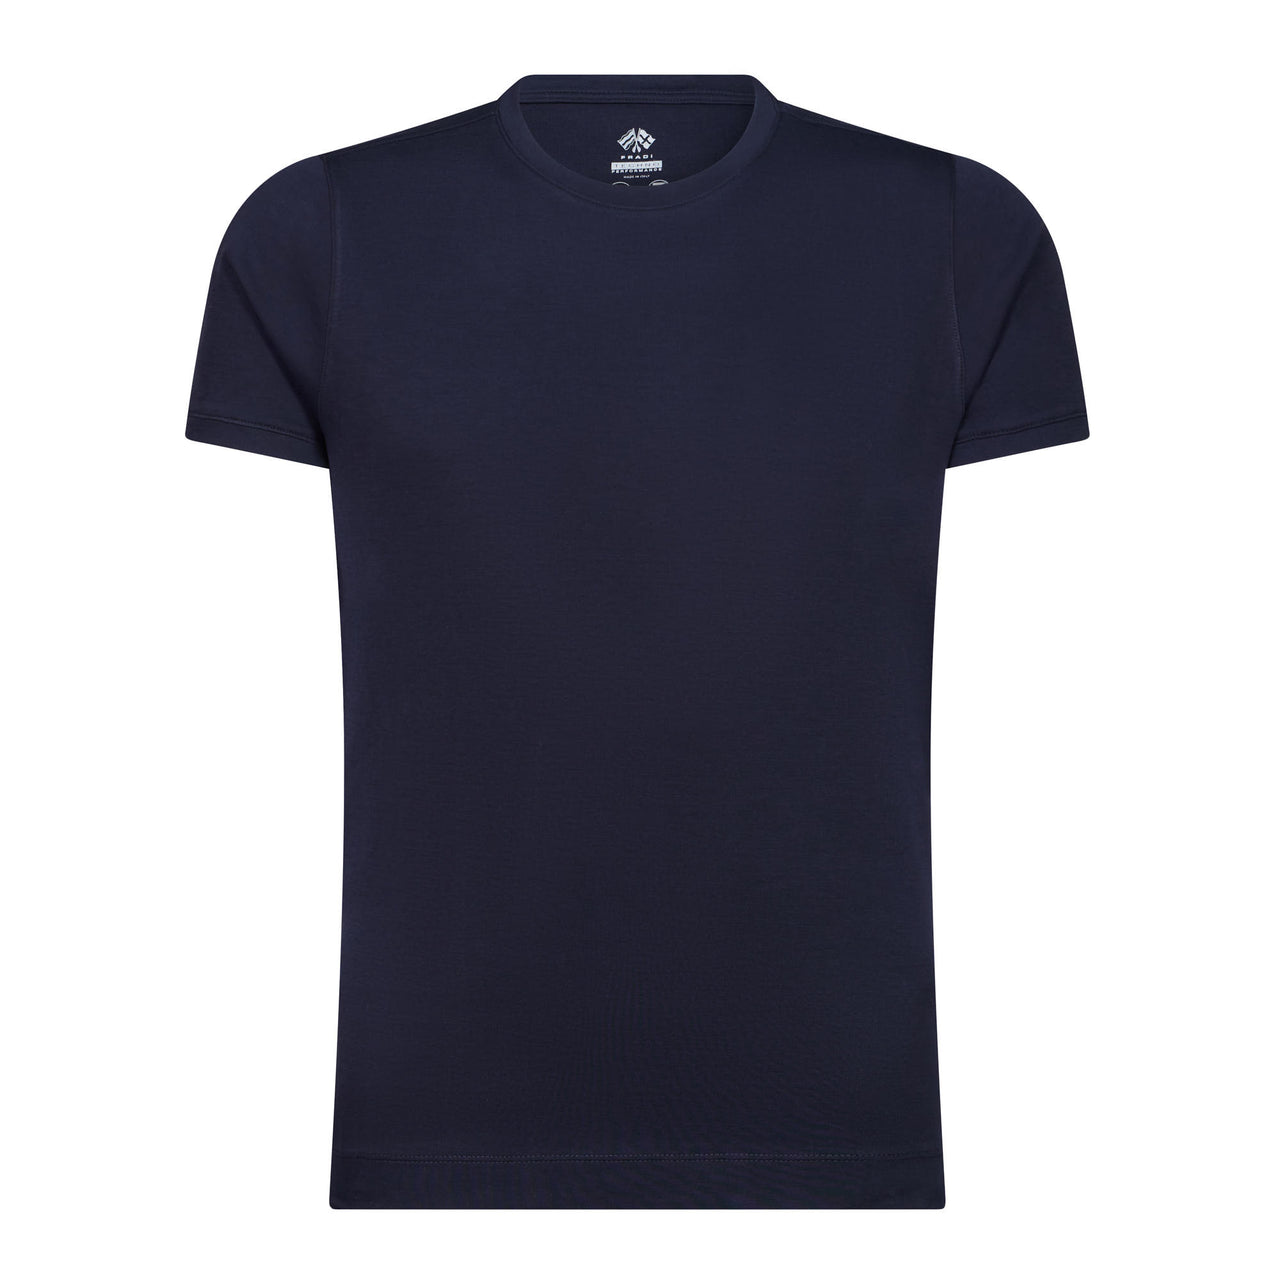 FRADI Short Sleeve T-Shirt NAVY BLUE